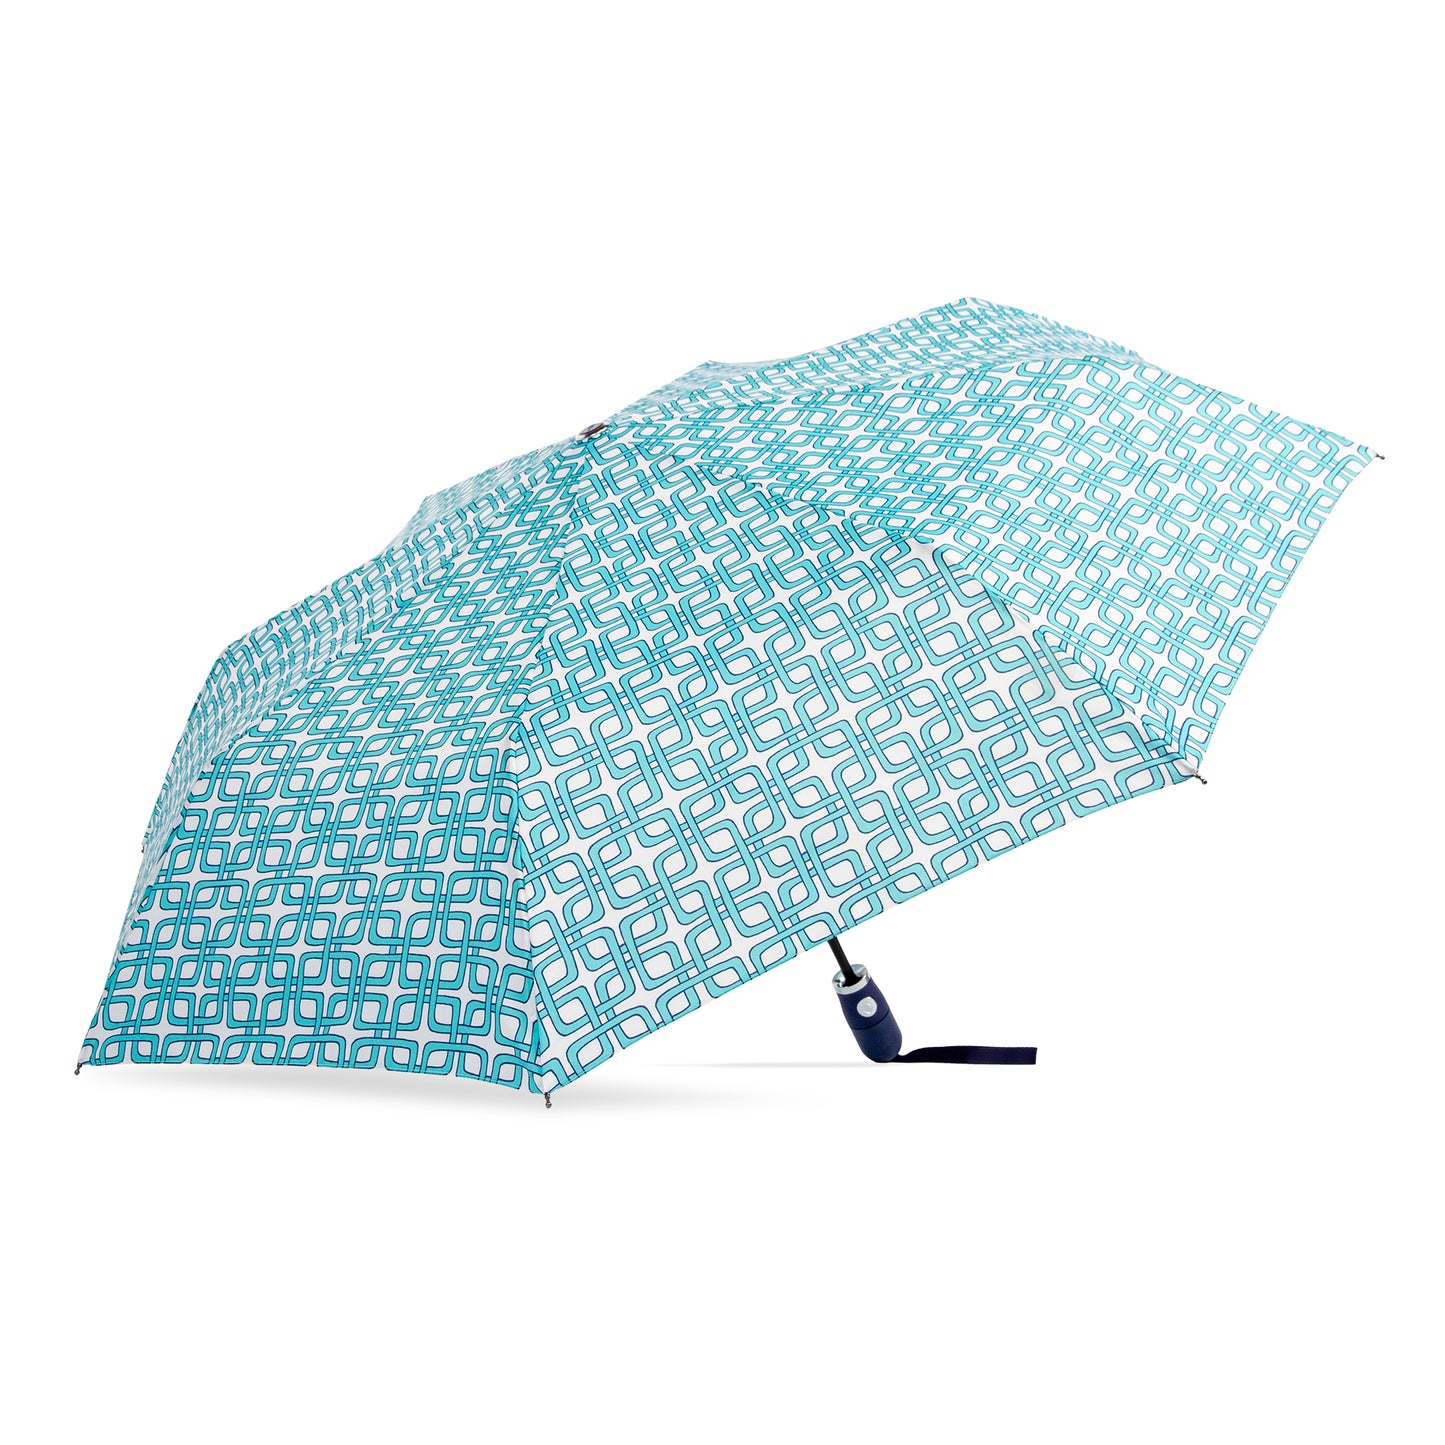 TRINA TURK x SHED RAIN Breezeblocks Compact Umbrella